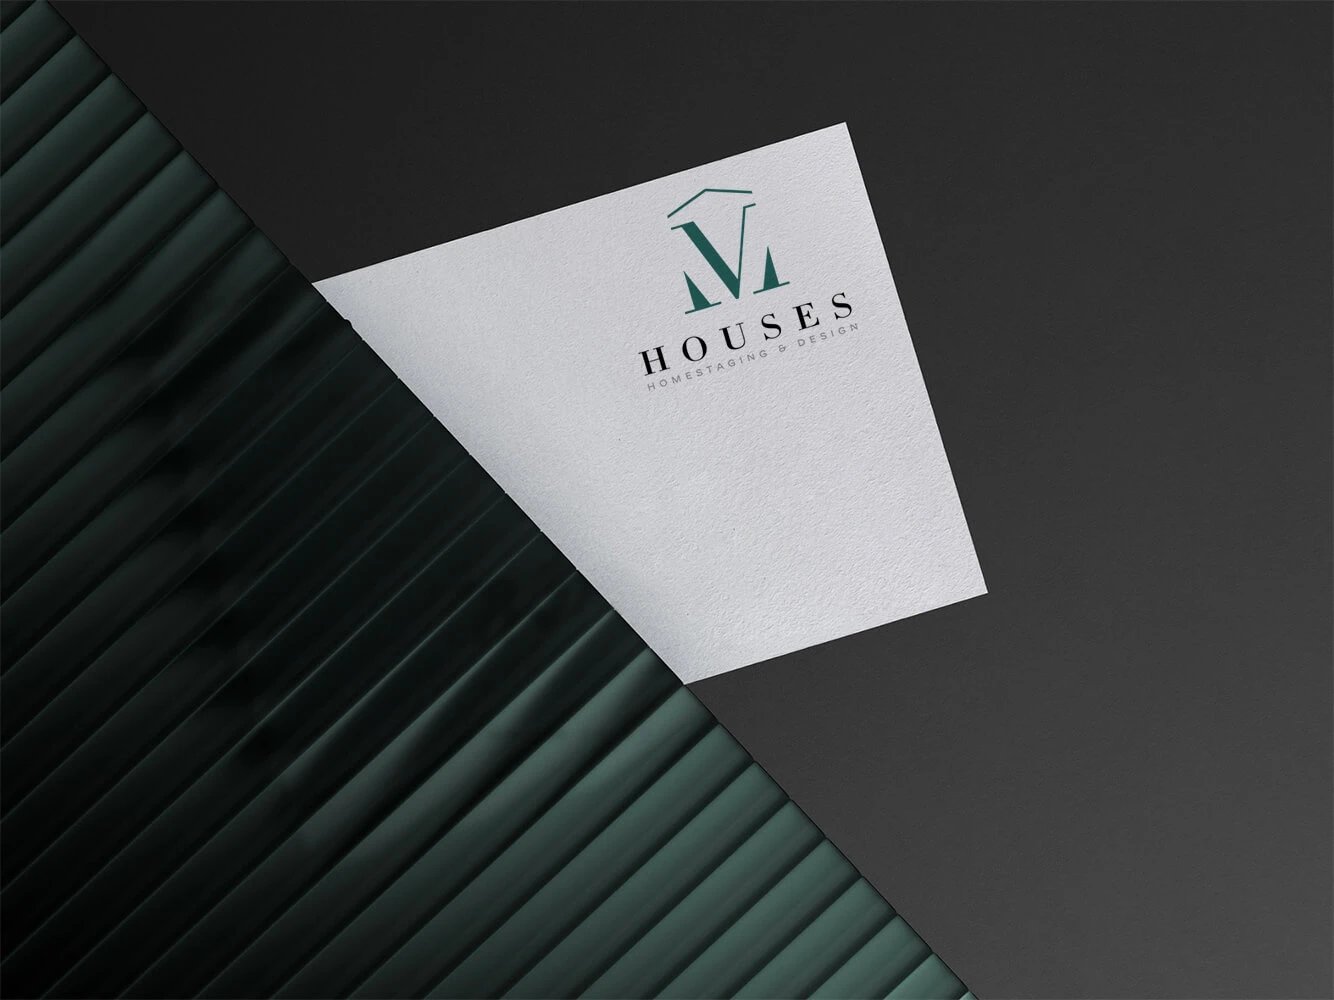 mv houses business card concept